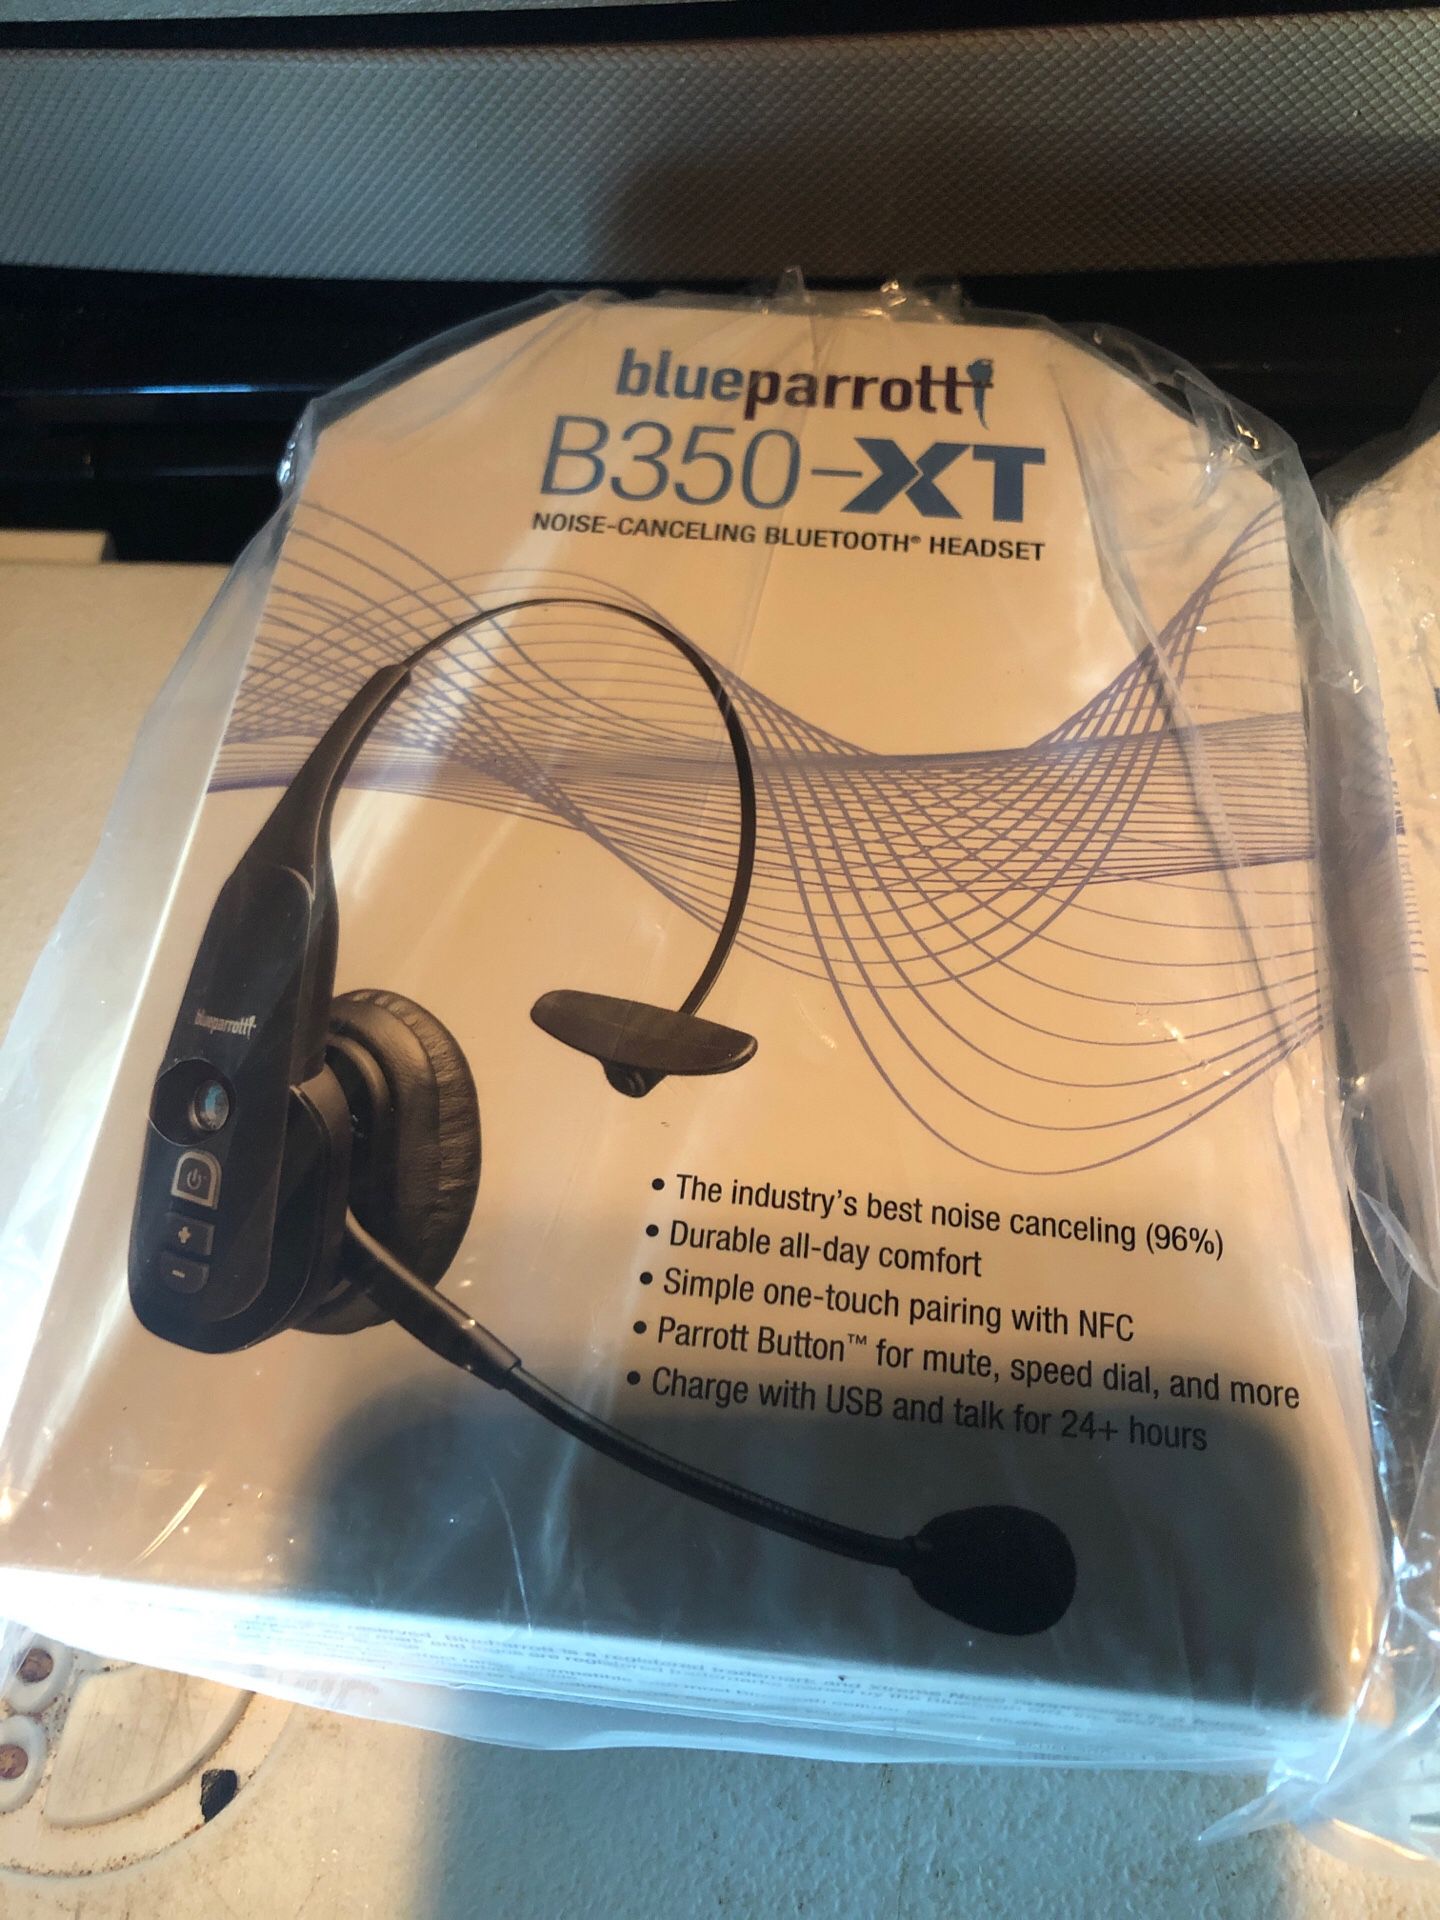 Blue parrot B350-XT (Noise-canceling Bluetooth Headset)